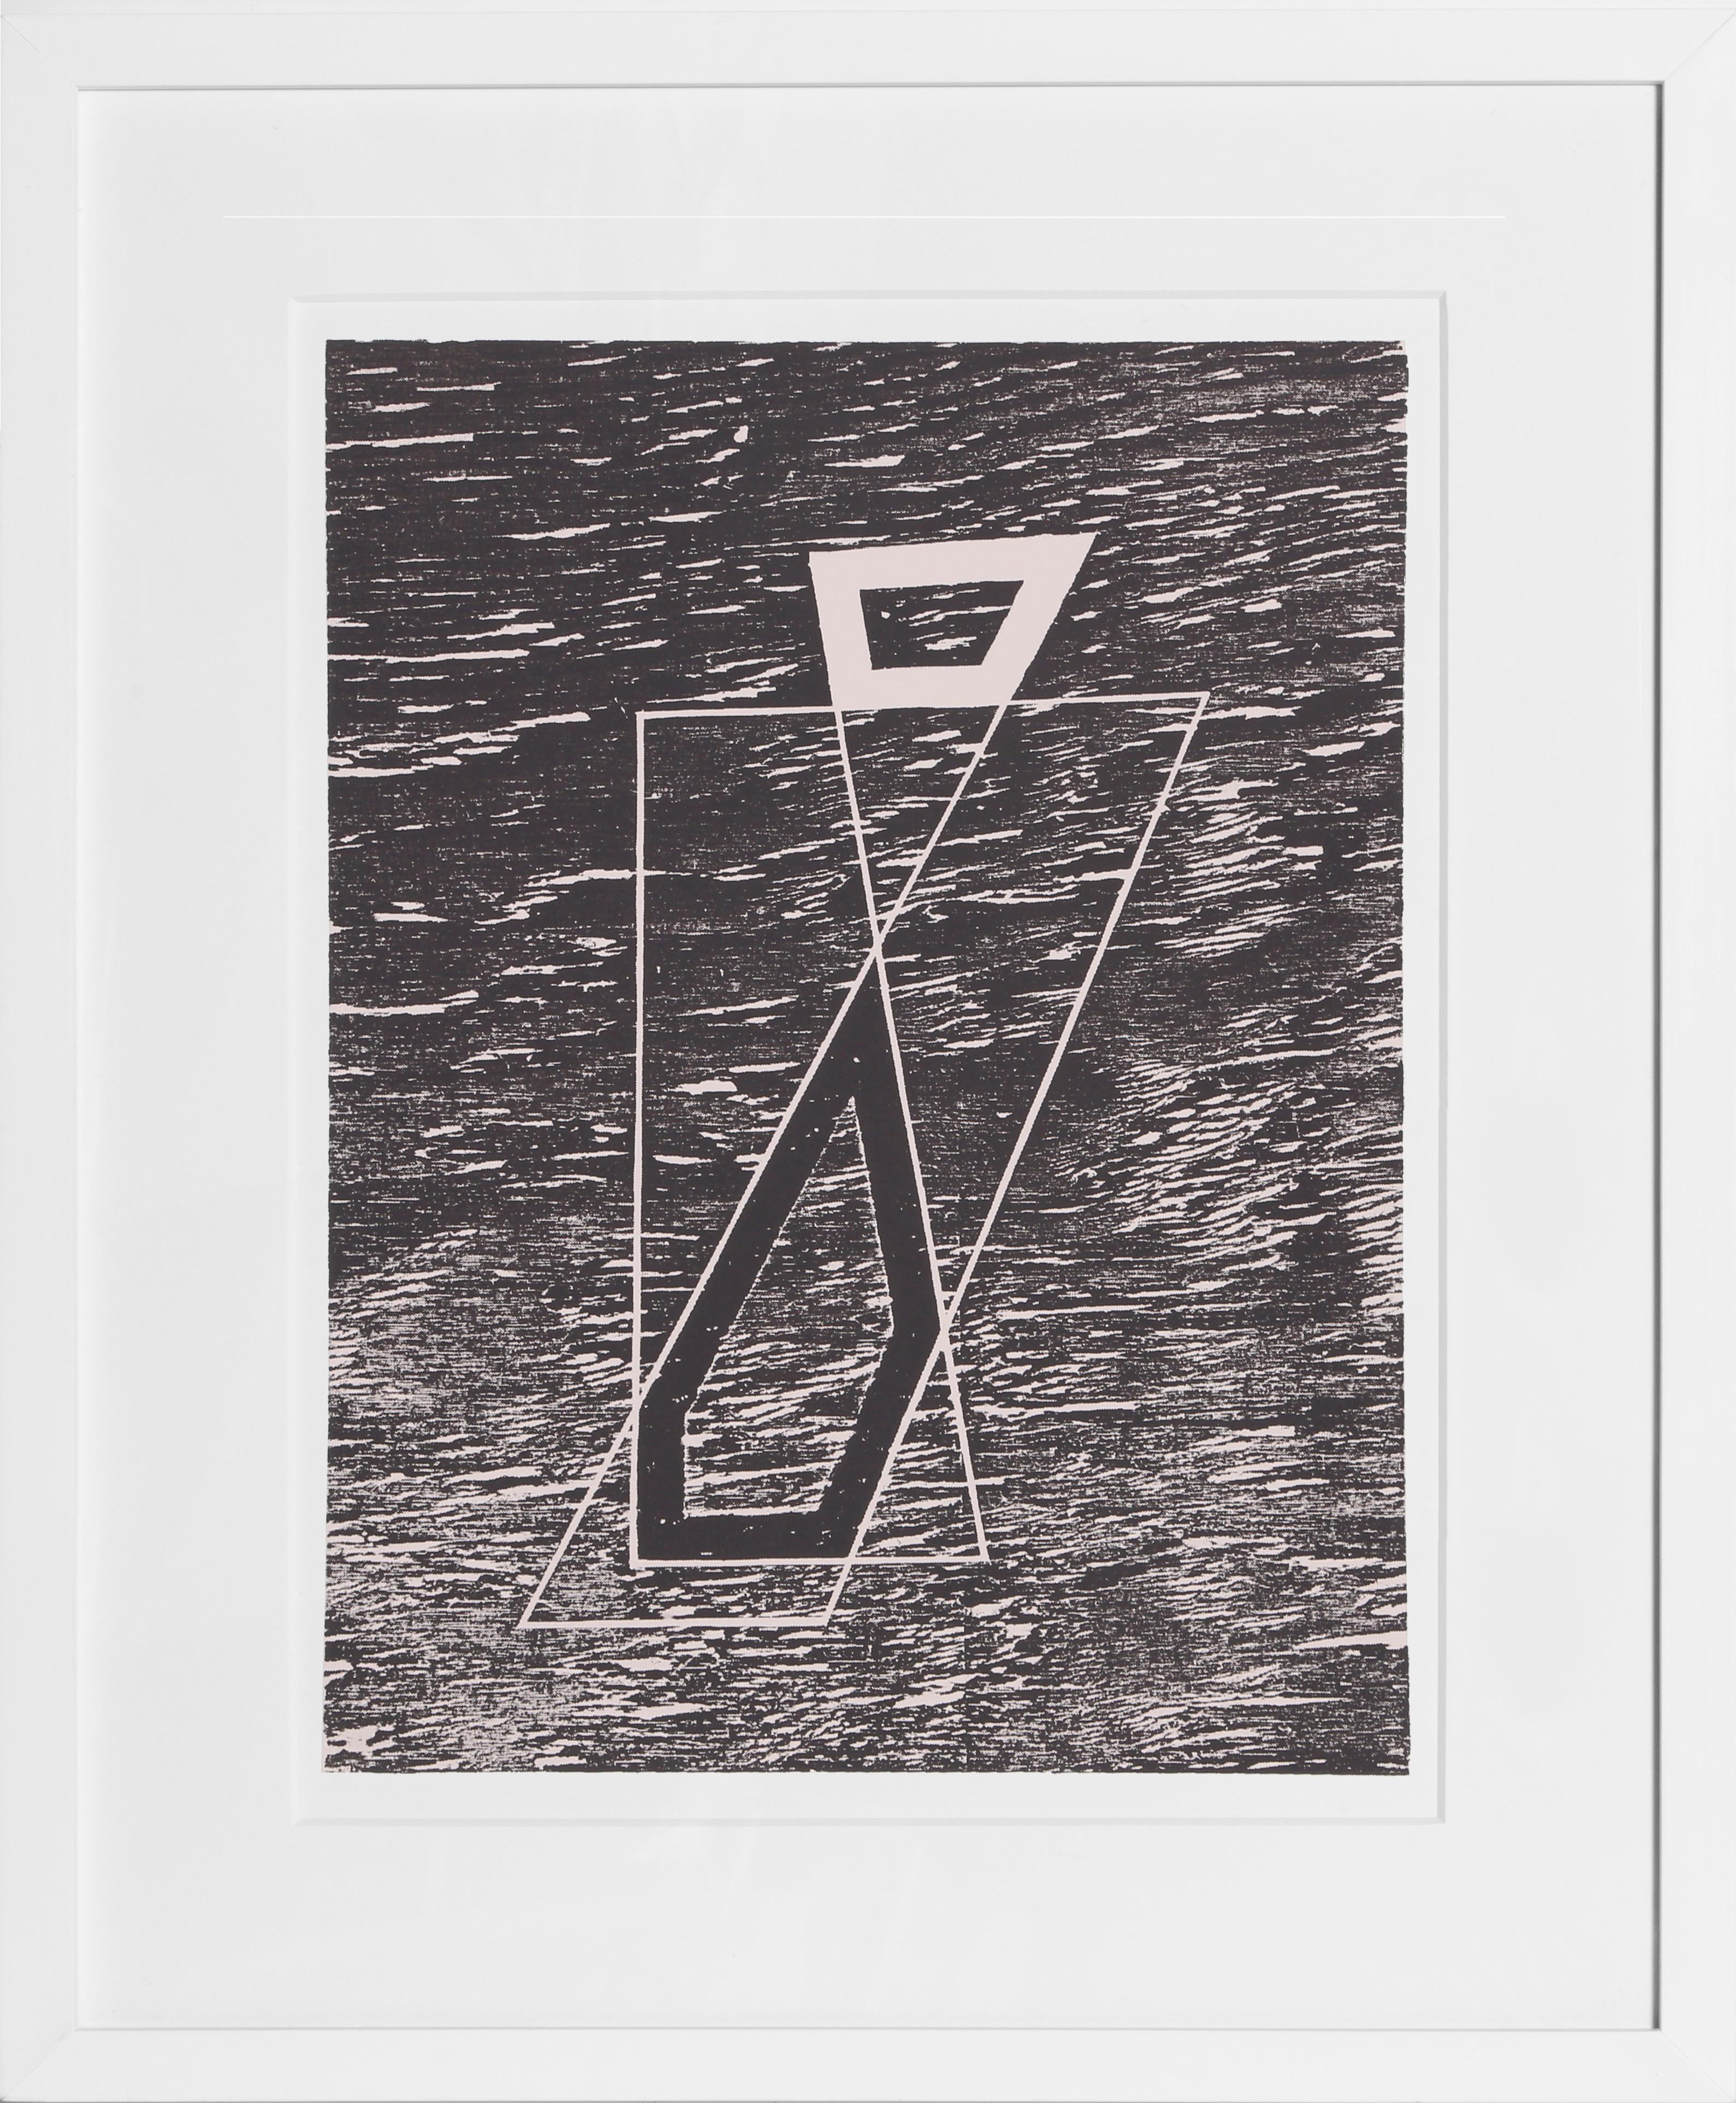 Wood Acting as Water - P2, F20, I2, Geometric Screenprint by Josef Albers